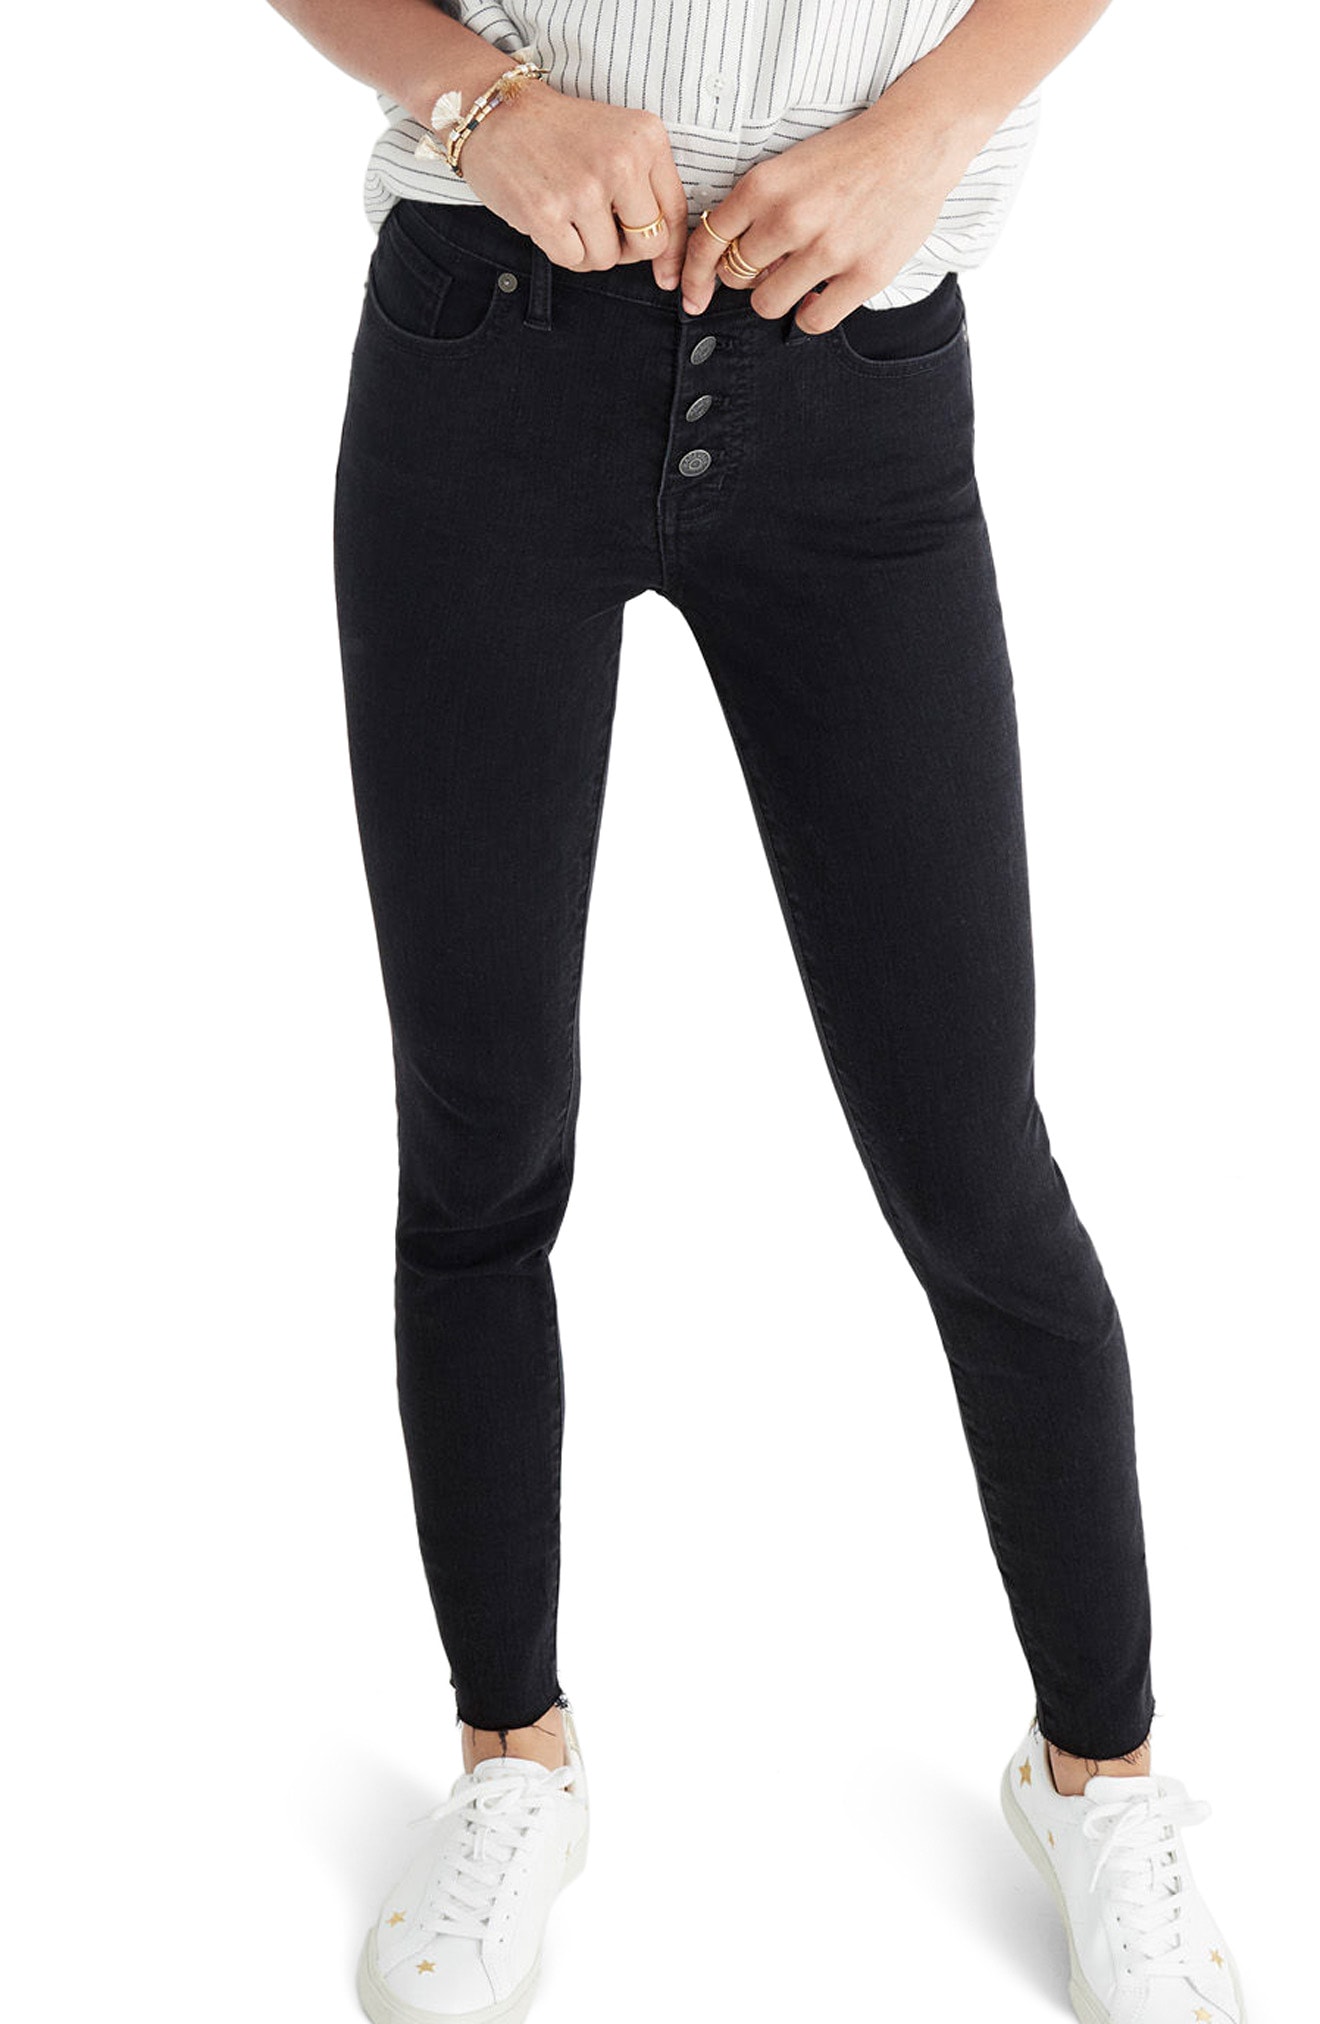 Women's Black Wash Skinny Jeans | Nordstrom